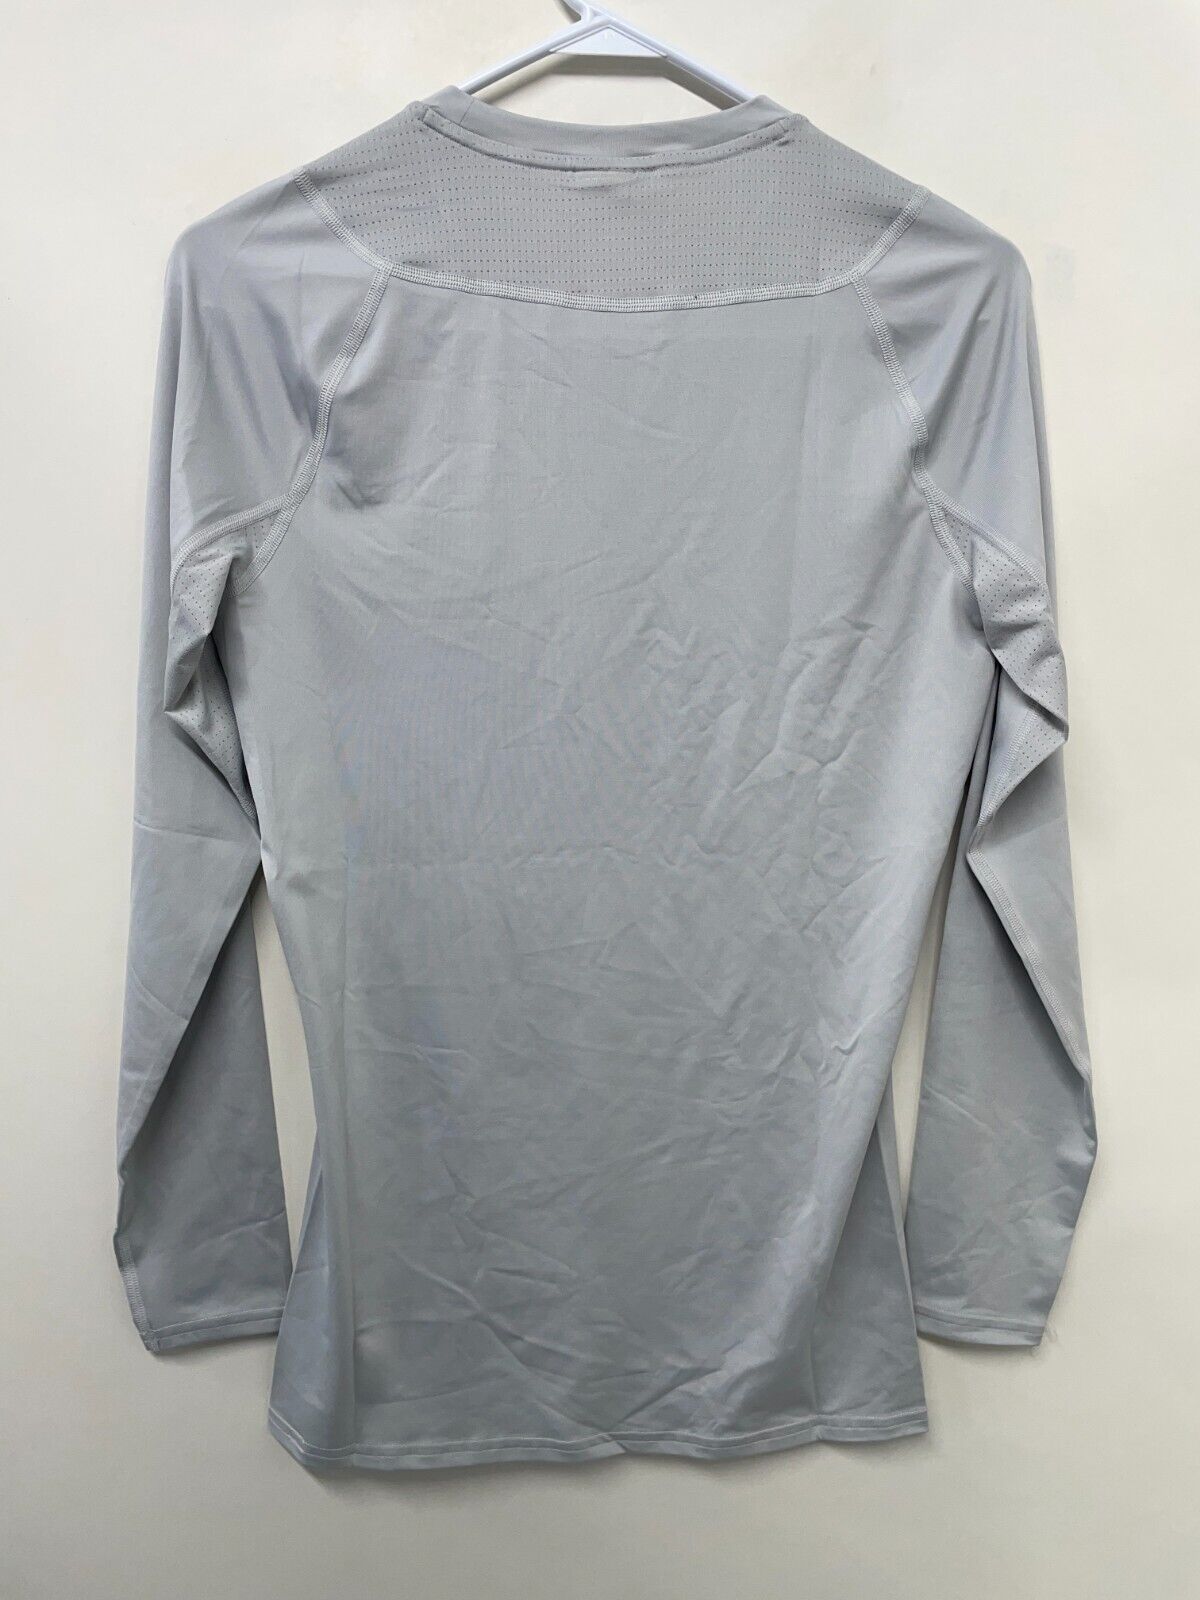 Gymshark Mens S Element Baselayer Long Sleeve T-Shirt Gray Ultra-Tight GMBP4019